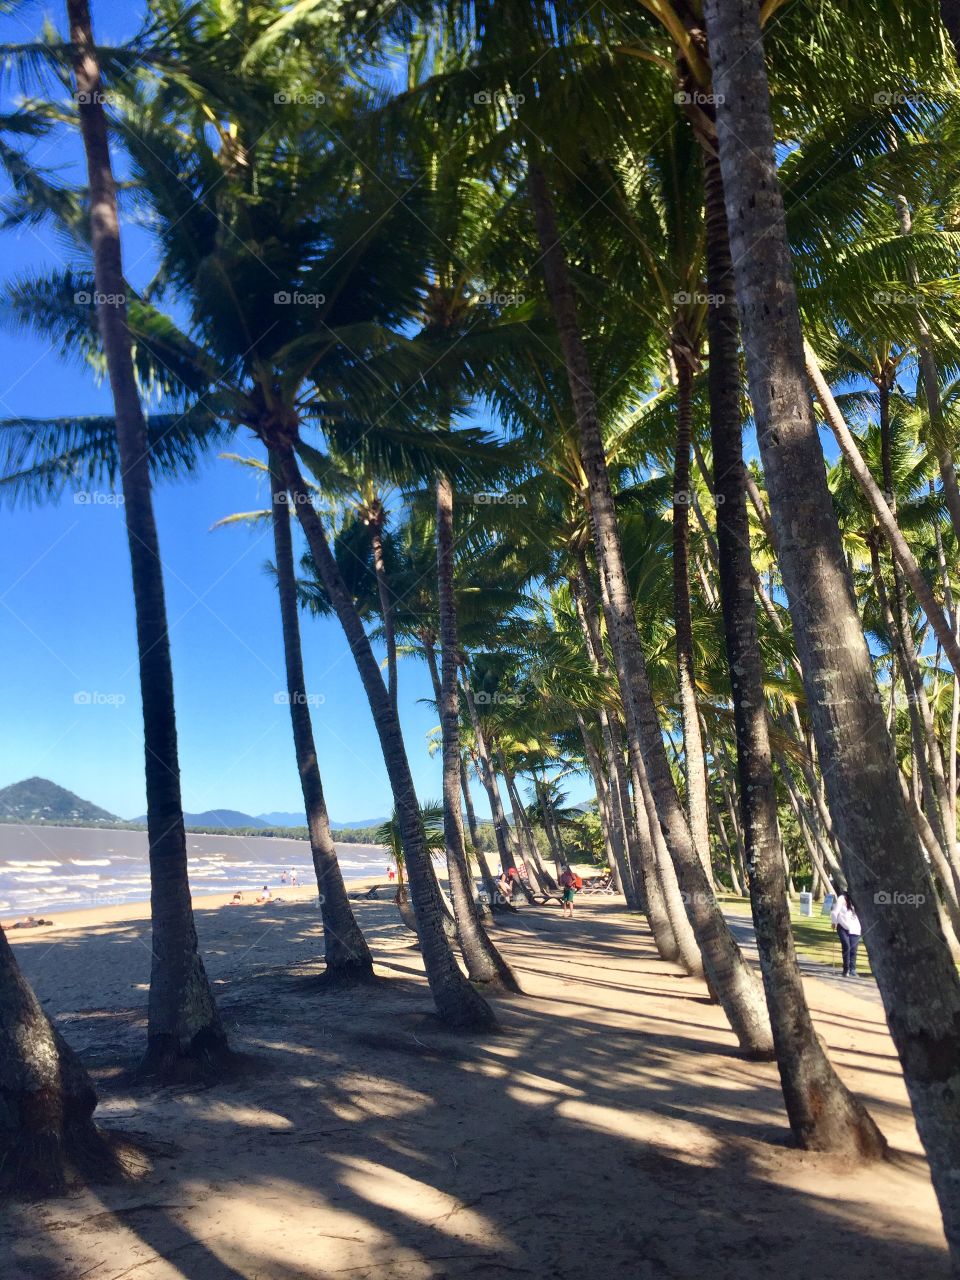 Palm trees along the beautiful beach